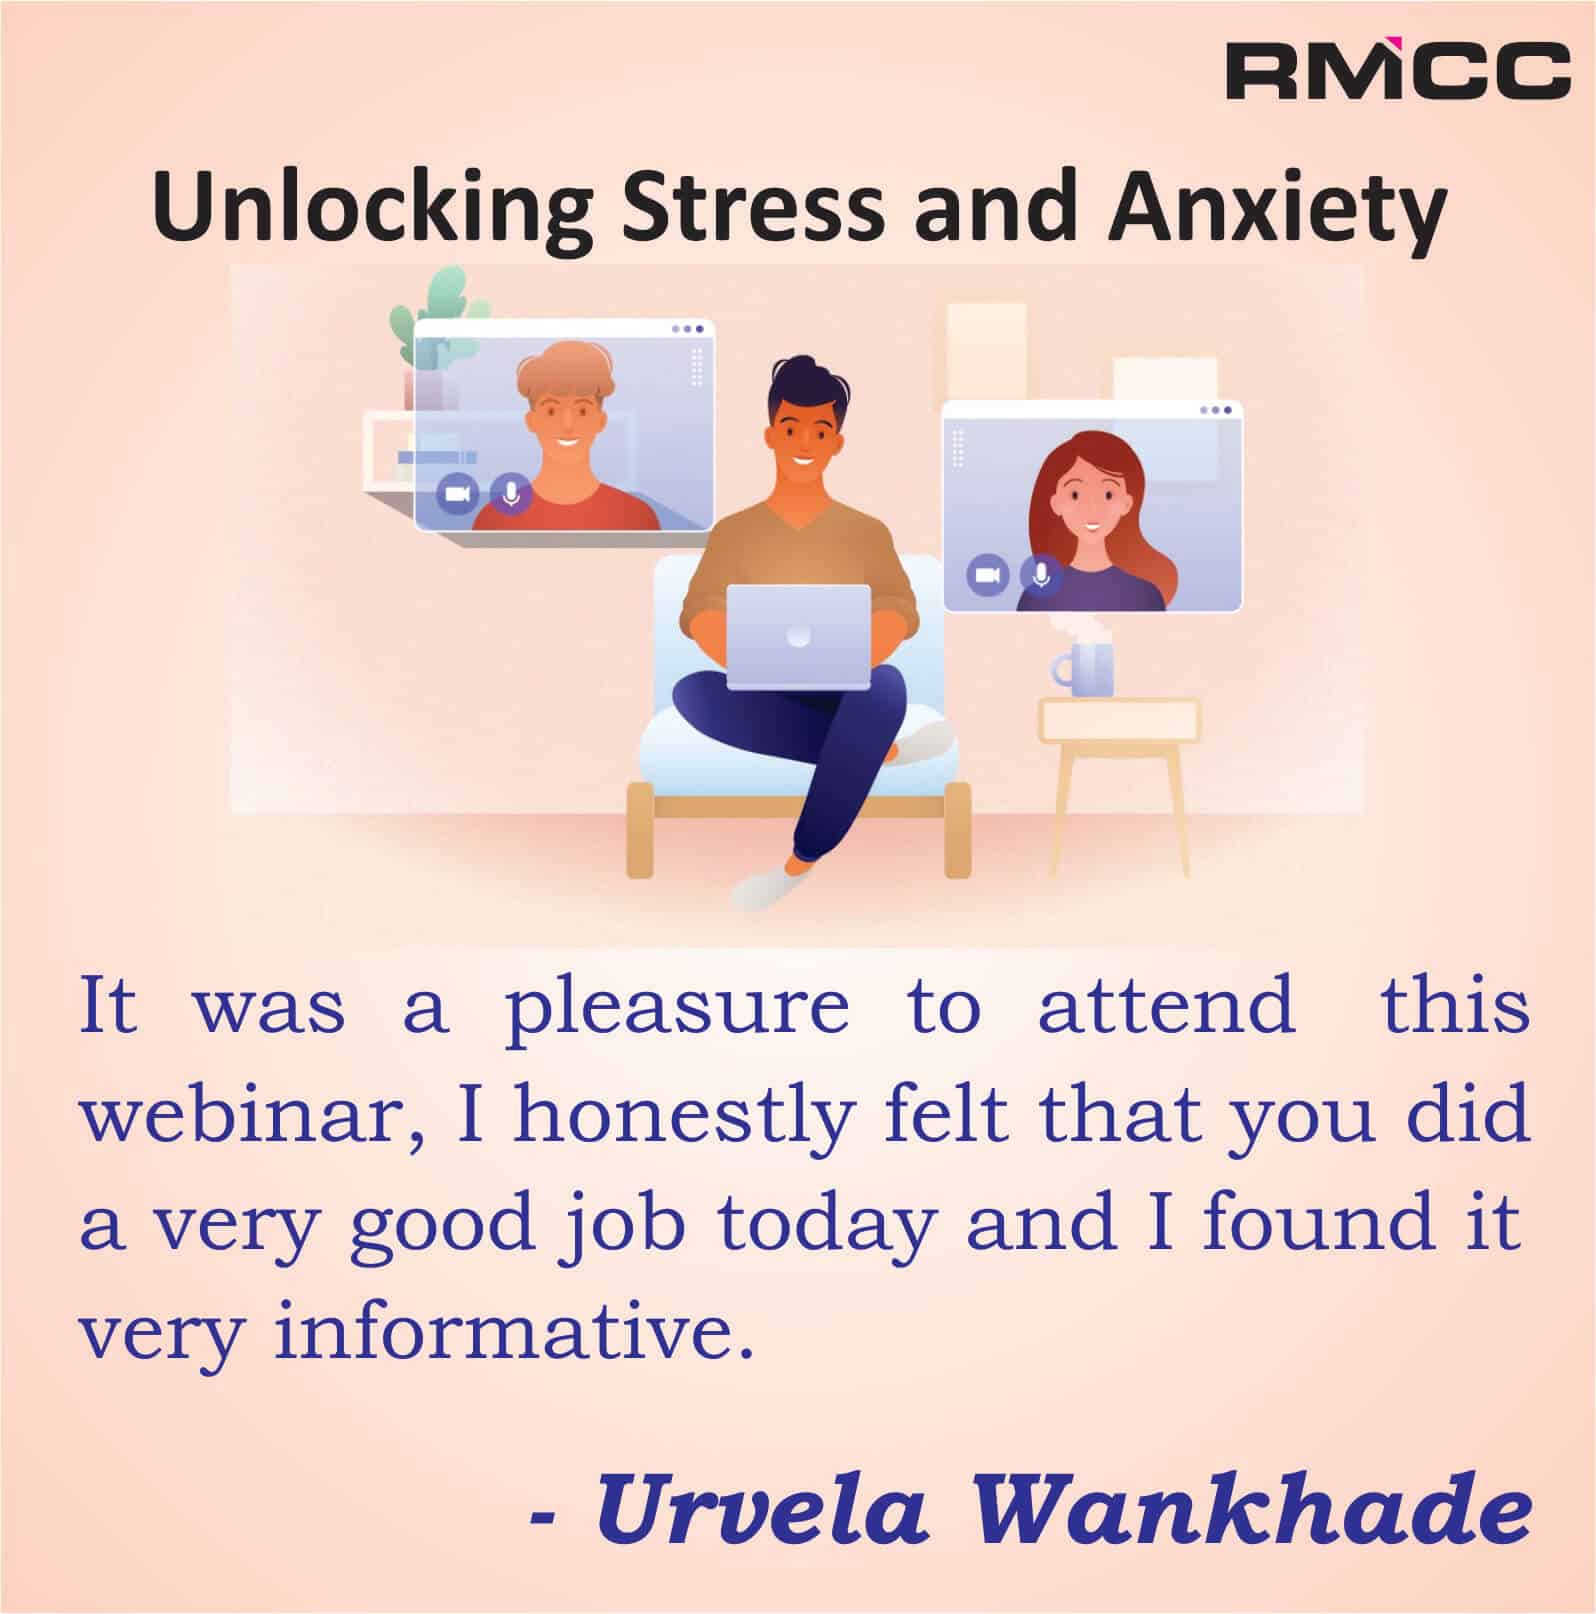 Stress and Anxiety Webinar Testimonial